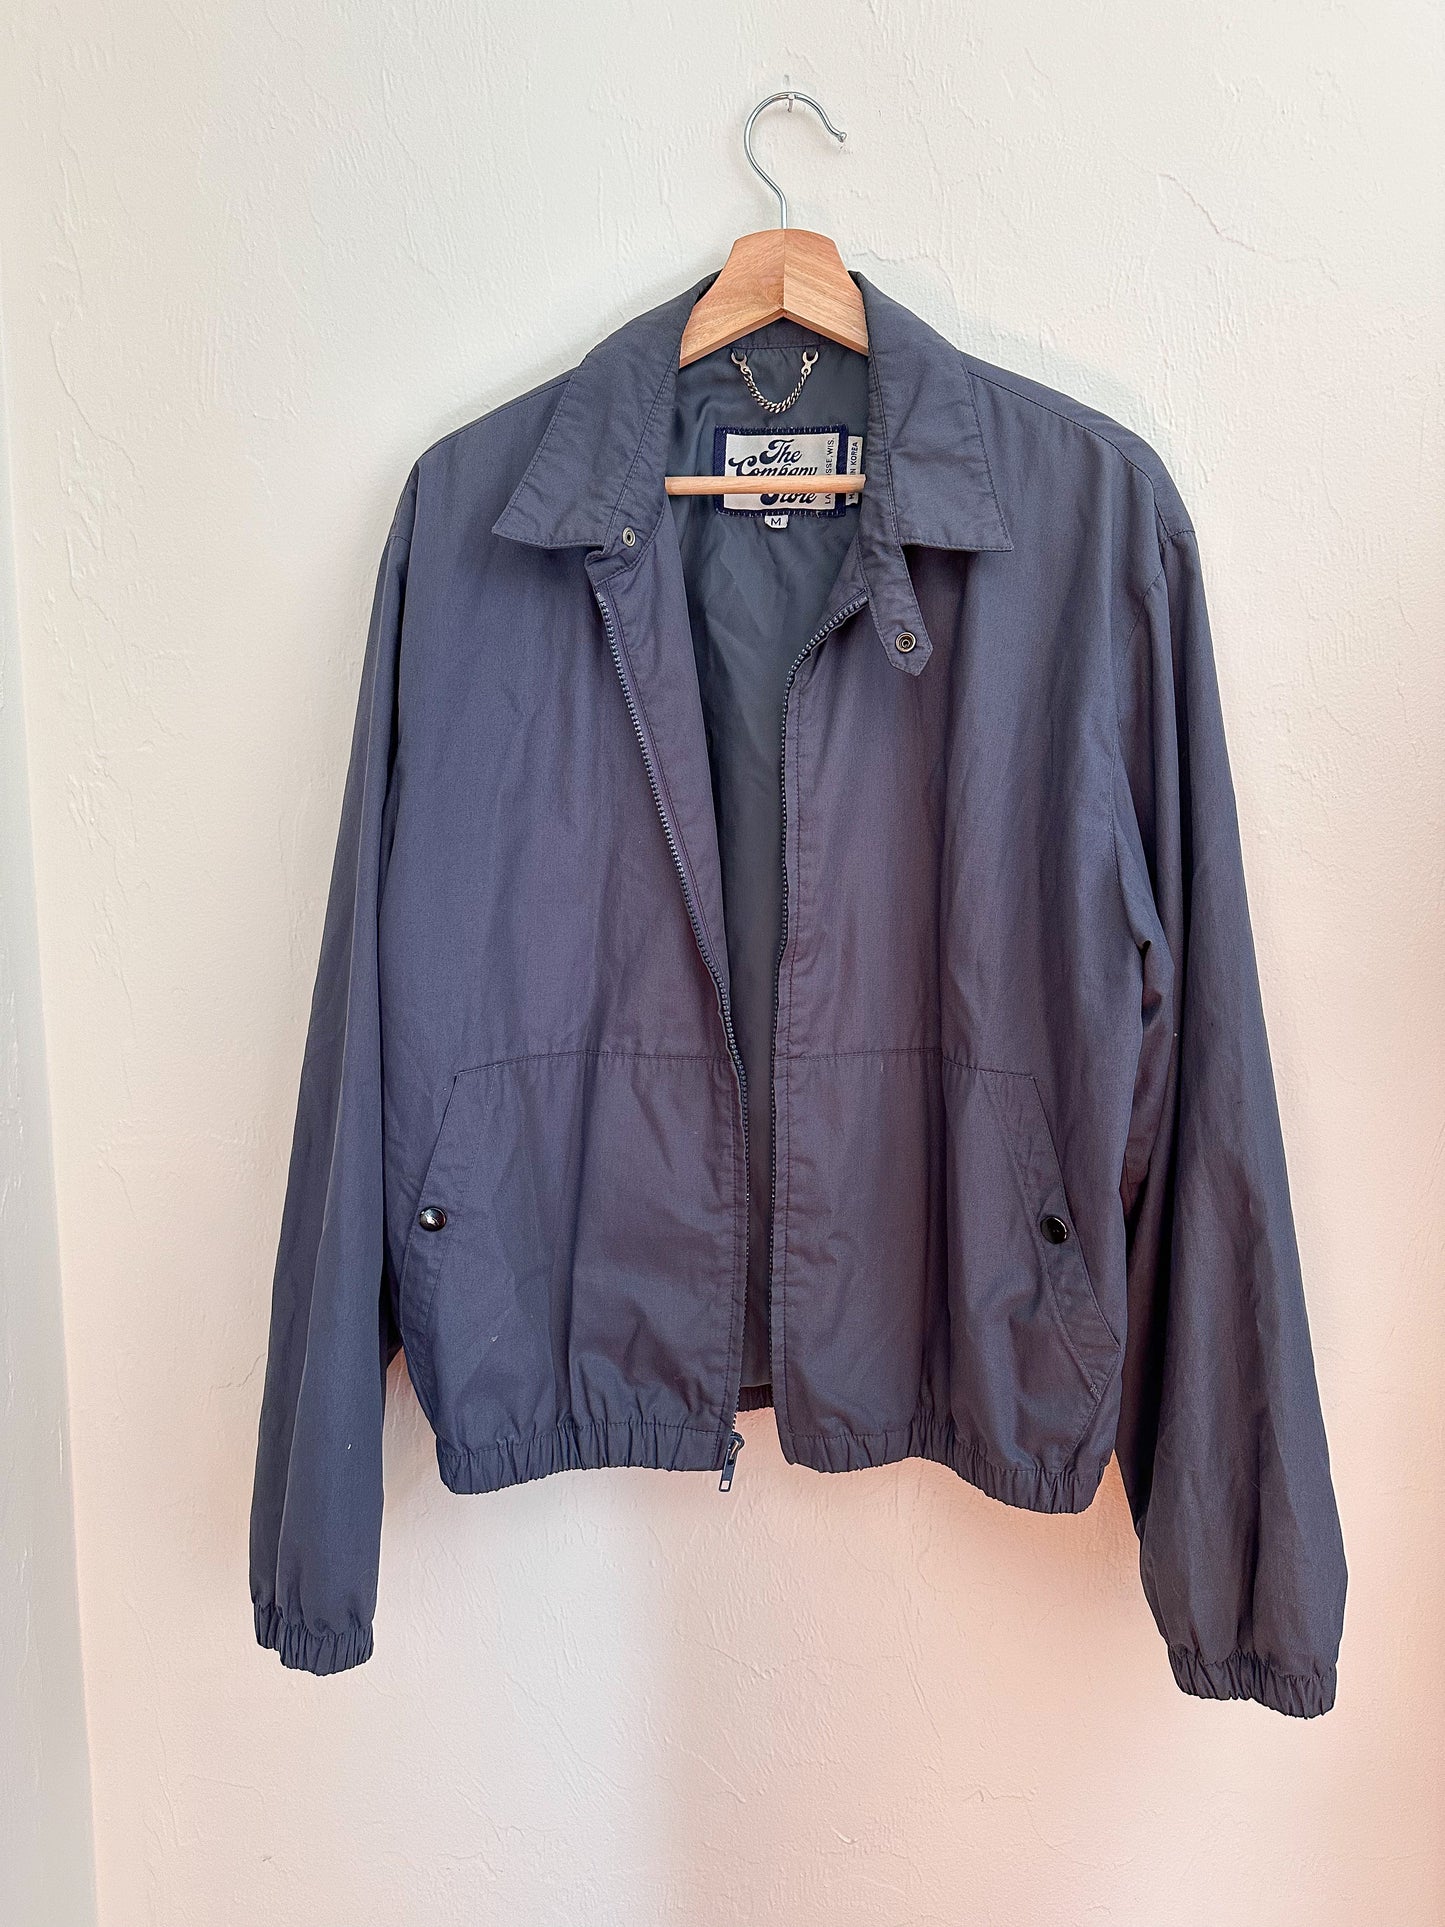 vintage navy workwear jacket